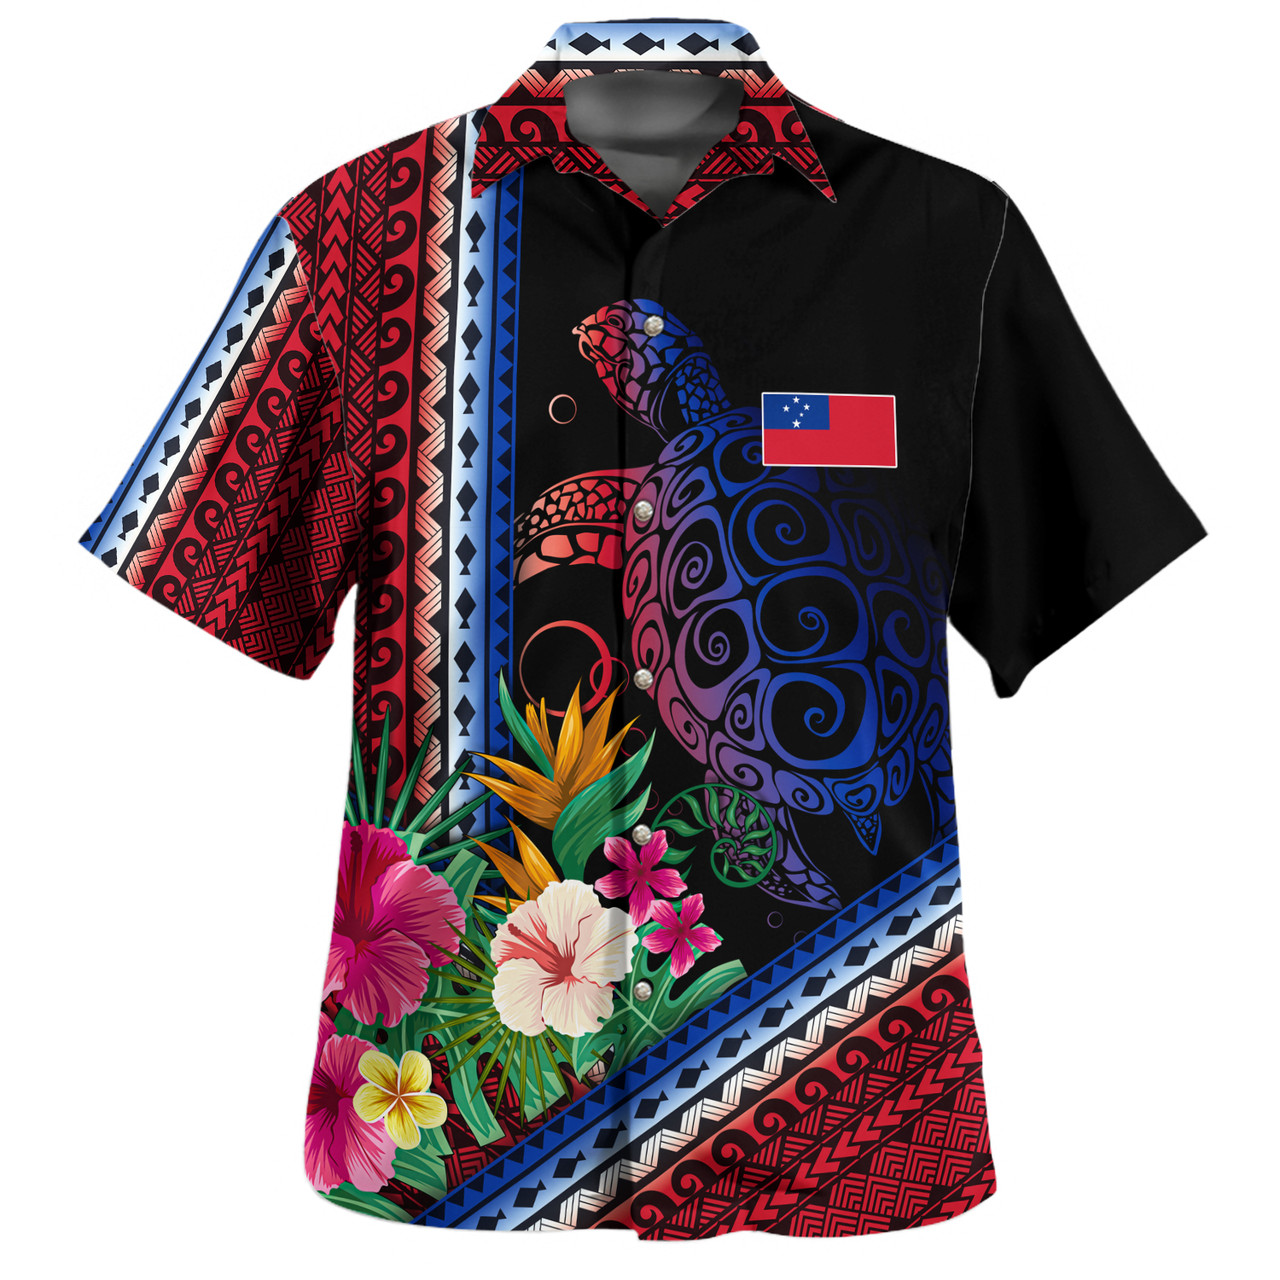 Samoa Hawaiian Shirt Polynesia Pattern With Tropical Flower